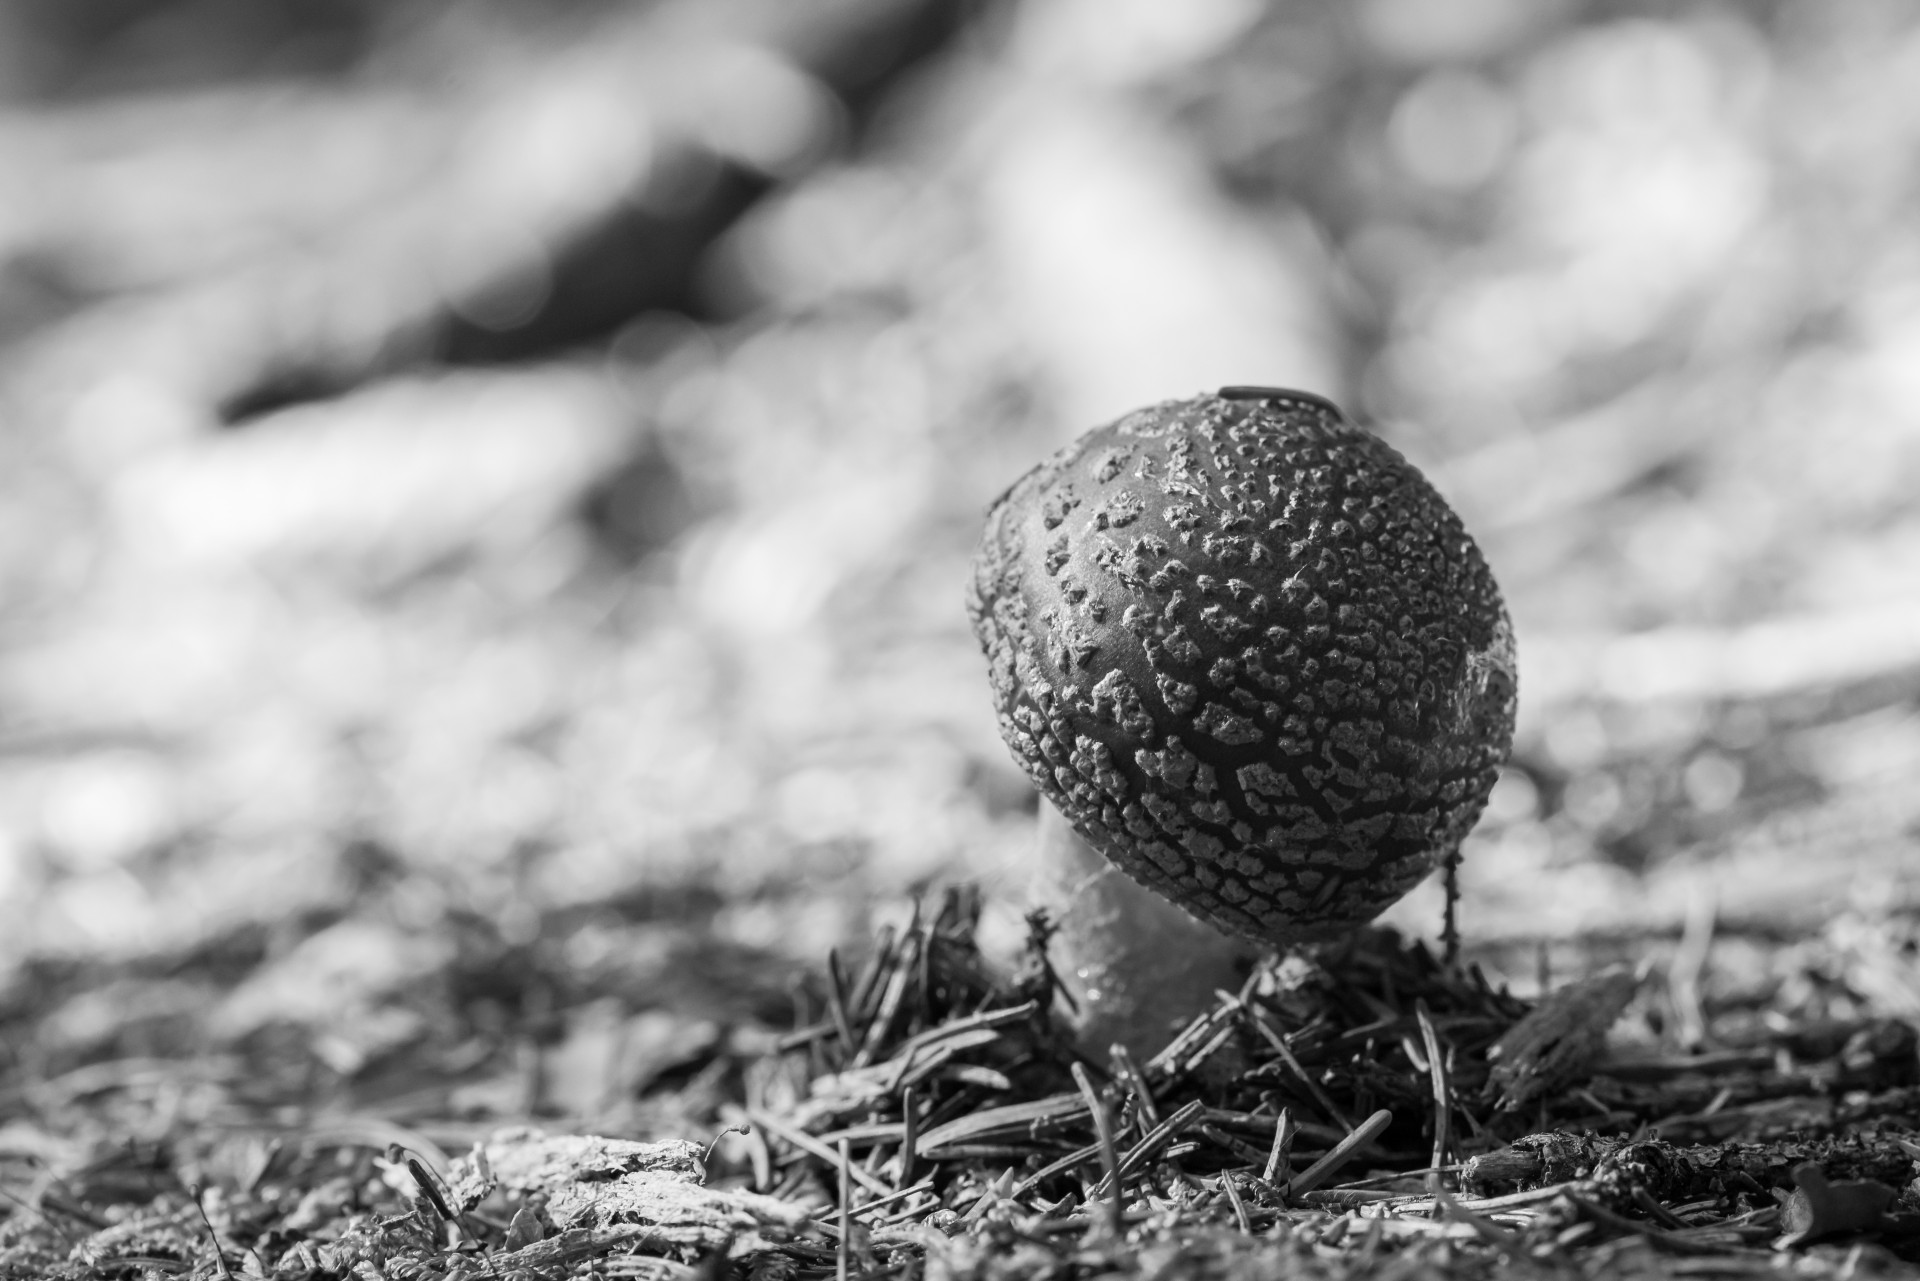 forest mushroom - black and white version